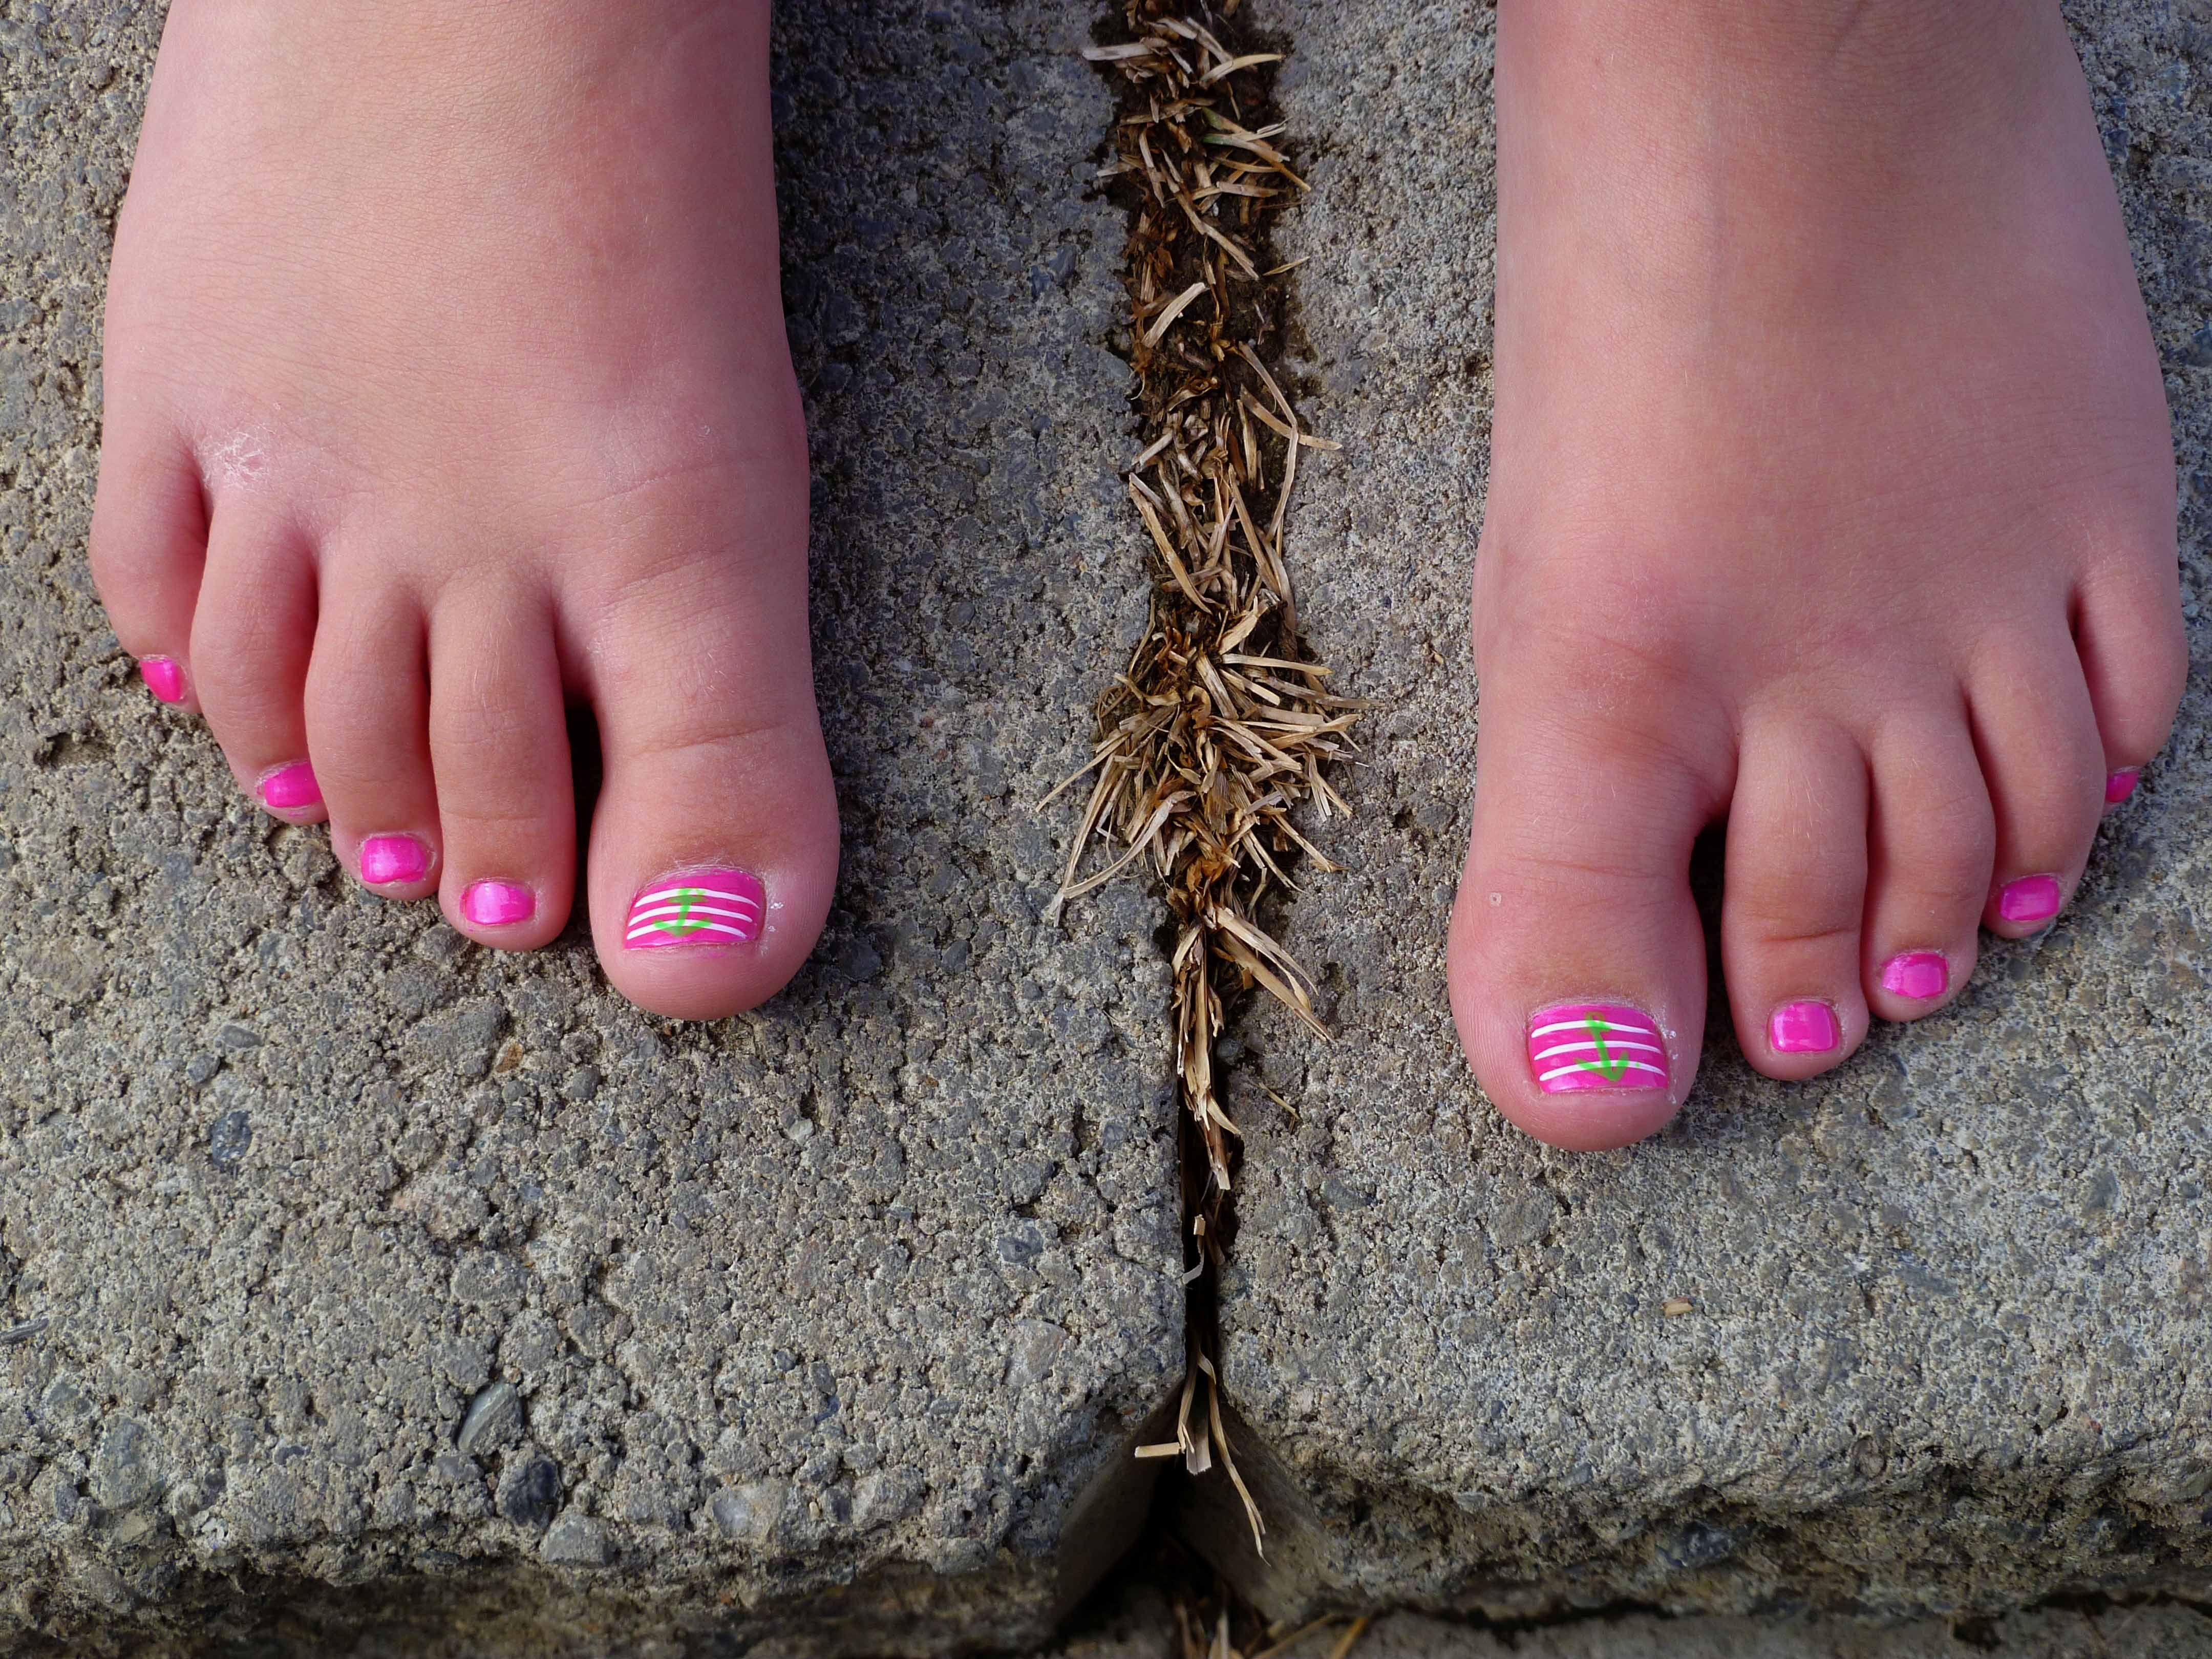 Candid crossed legs painted toes